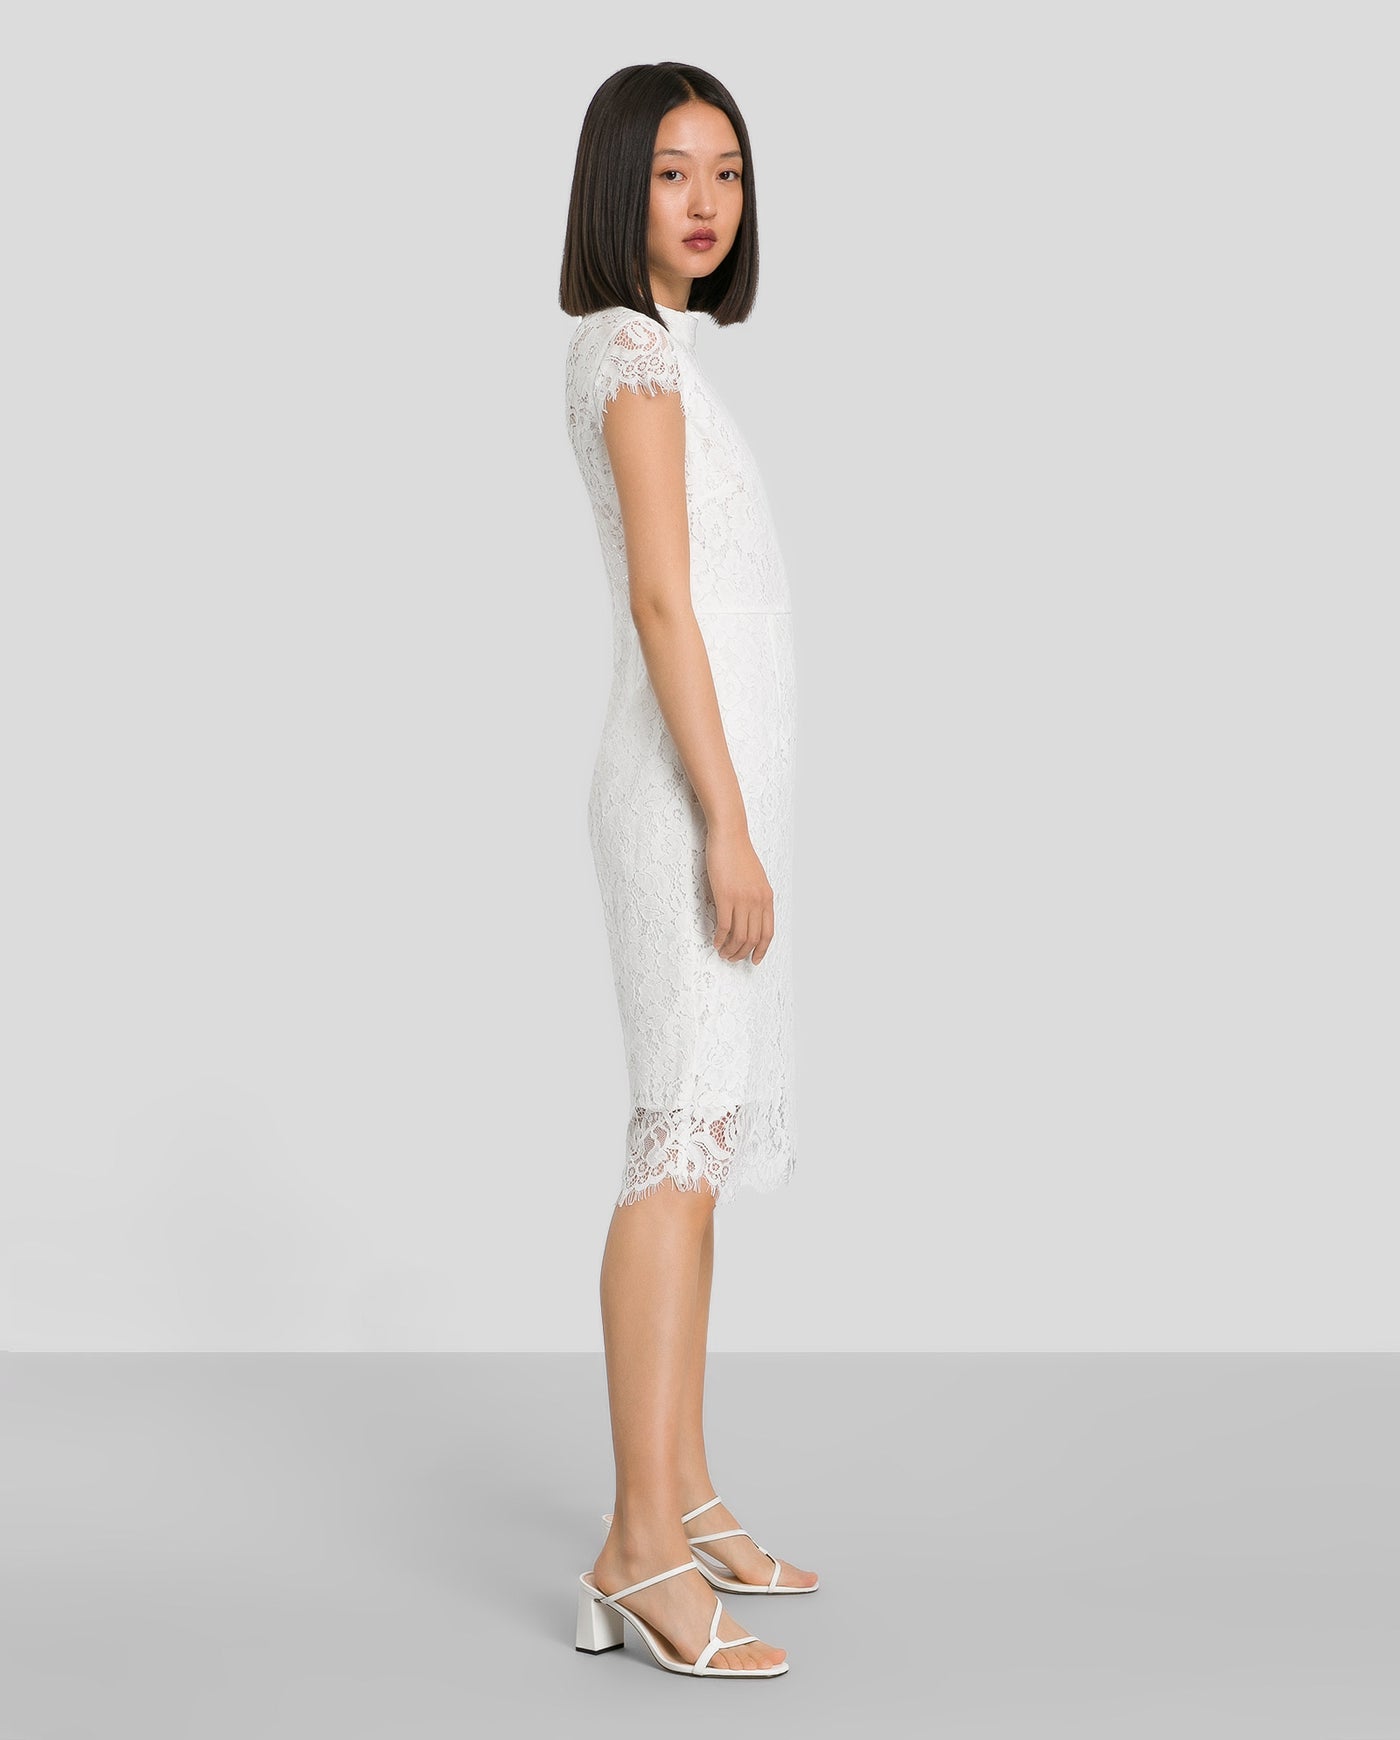 IVY OAK - MARA Dress - IO1100X7044-WH010 - White